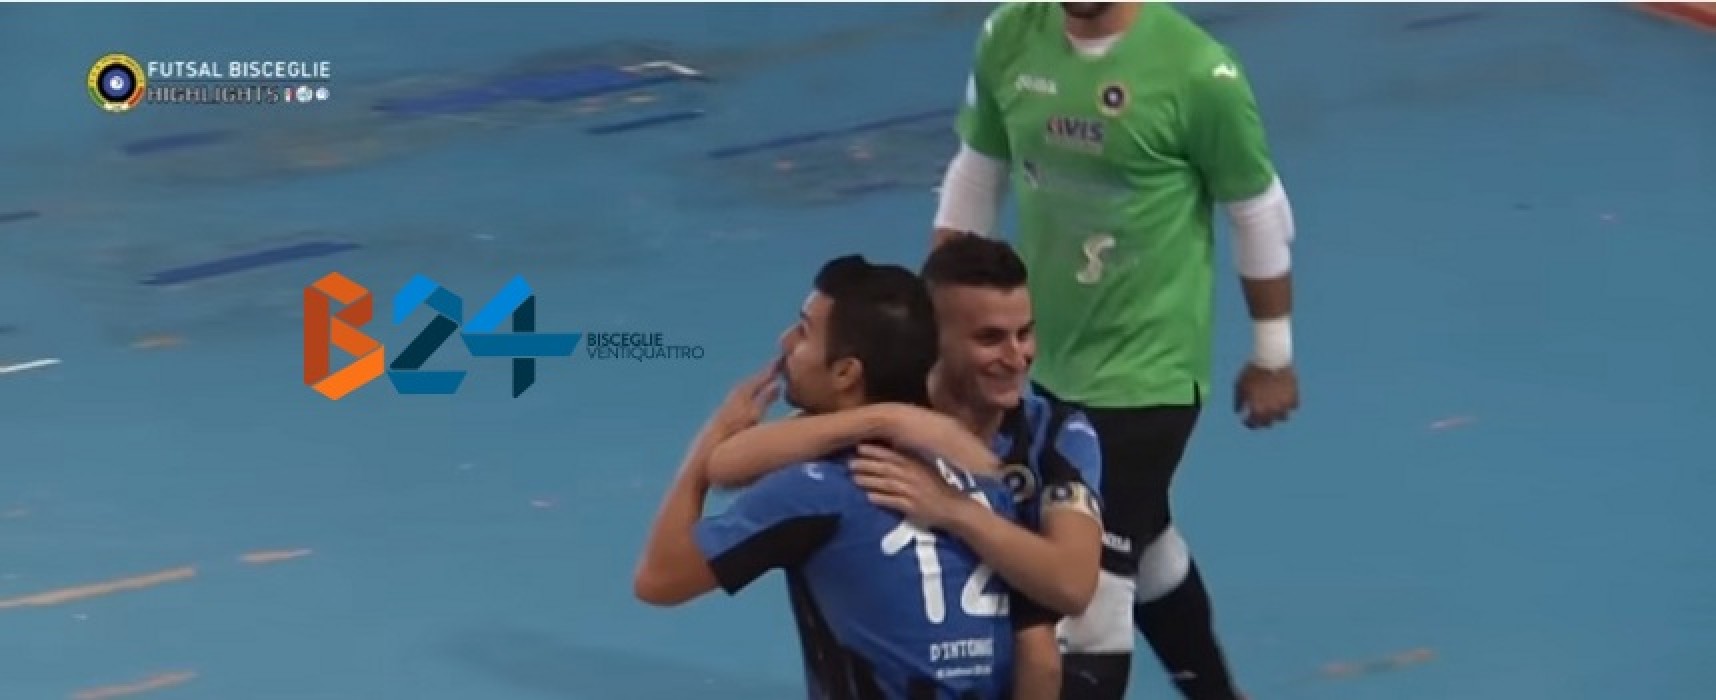 Futsal Bisceglie-Catanzaro 4-3, guarda gli highlights / VIDEO